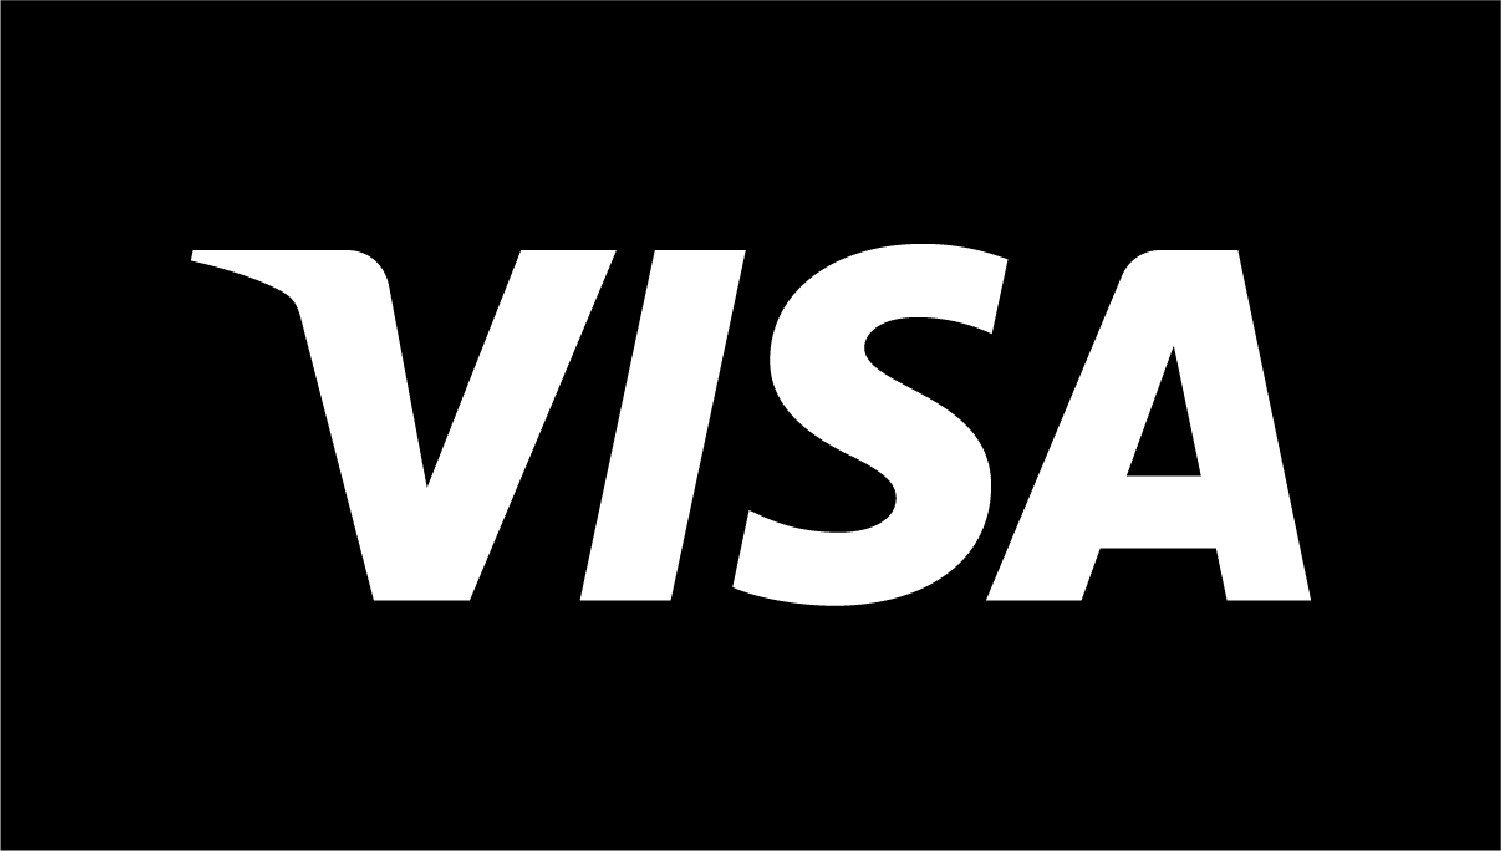 Image Visa